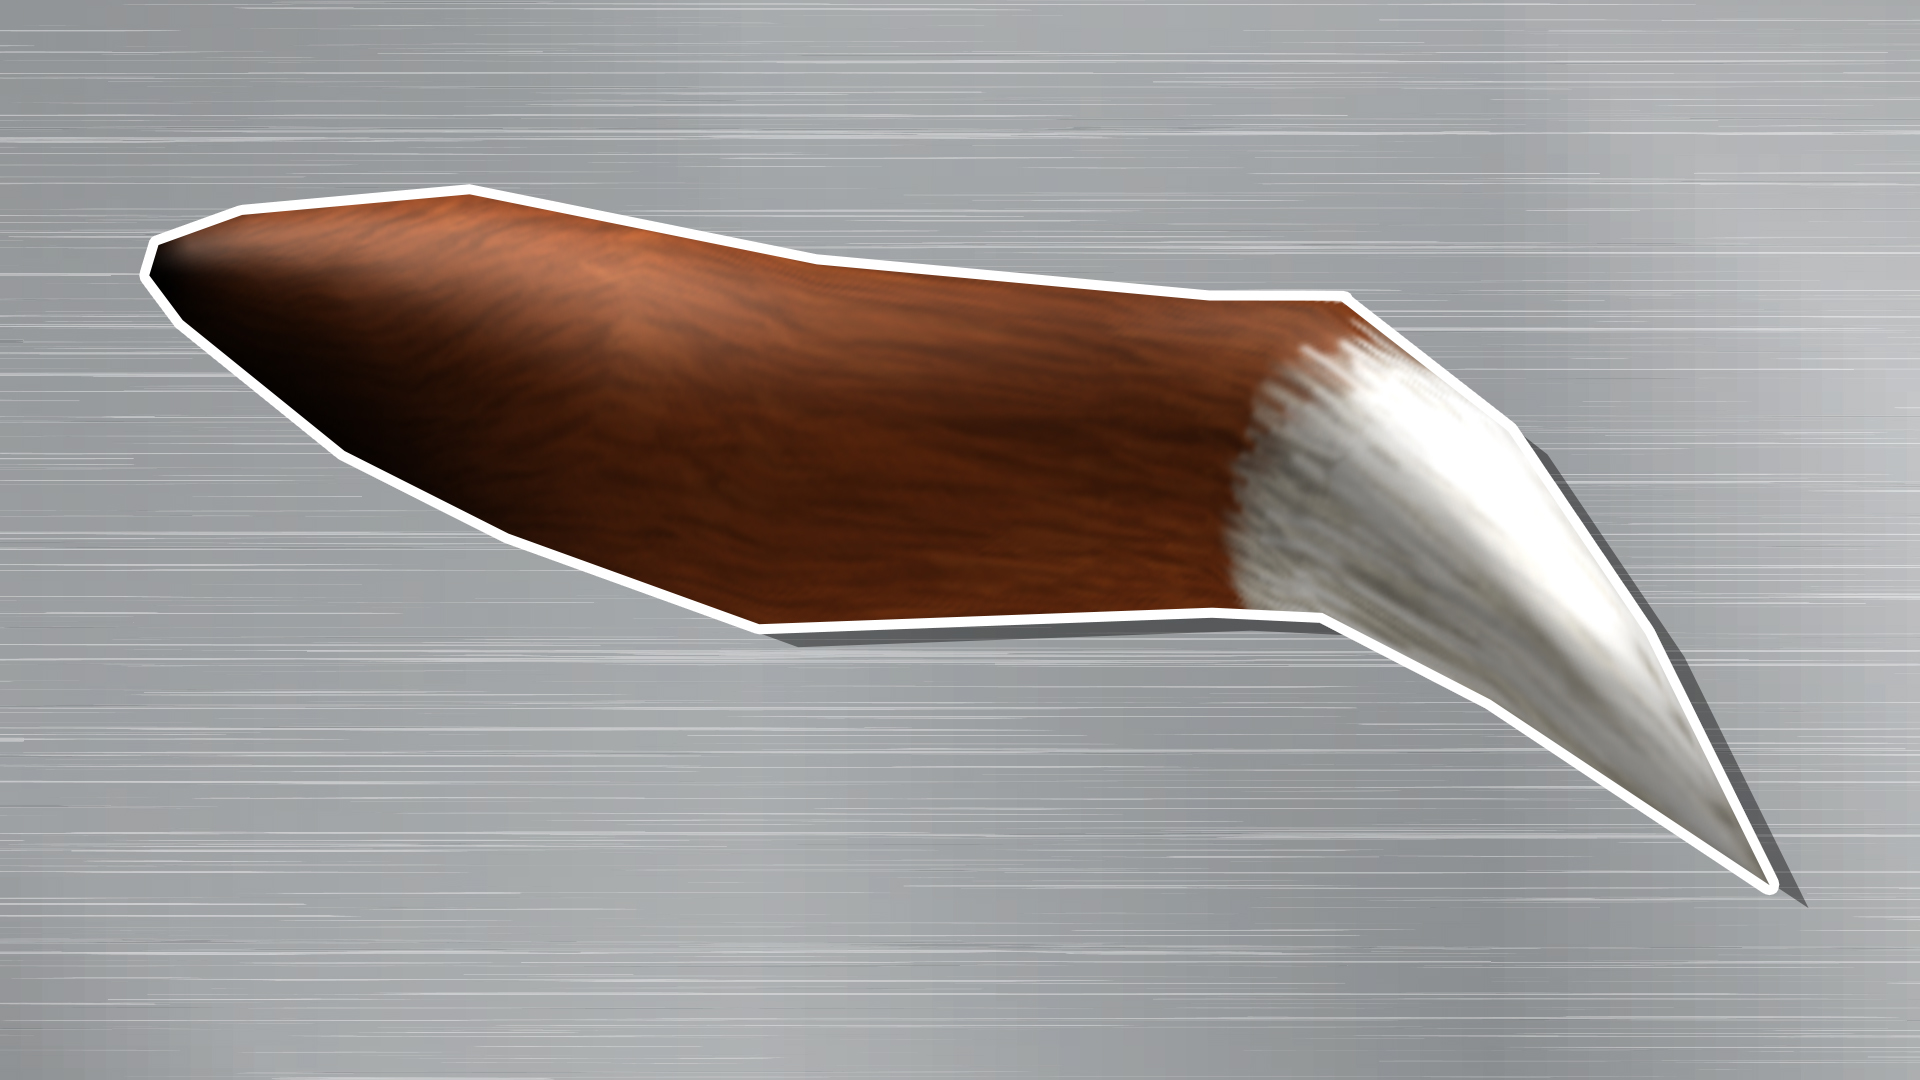 Fox tail